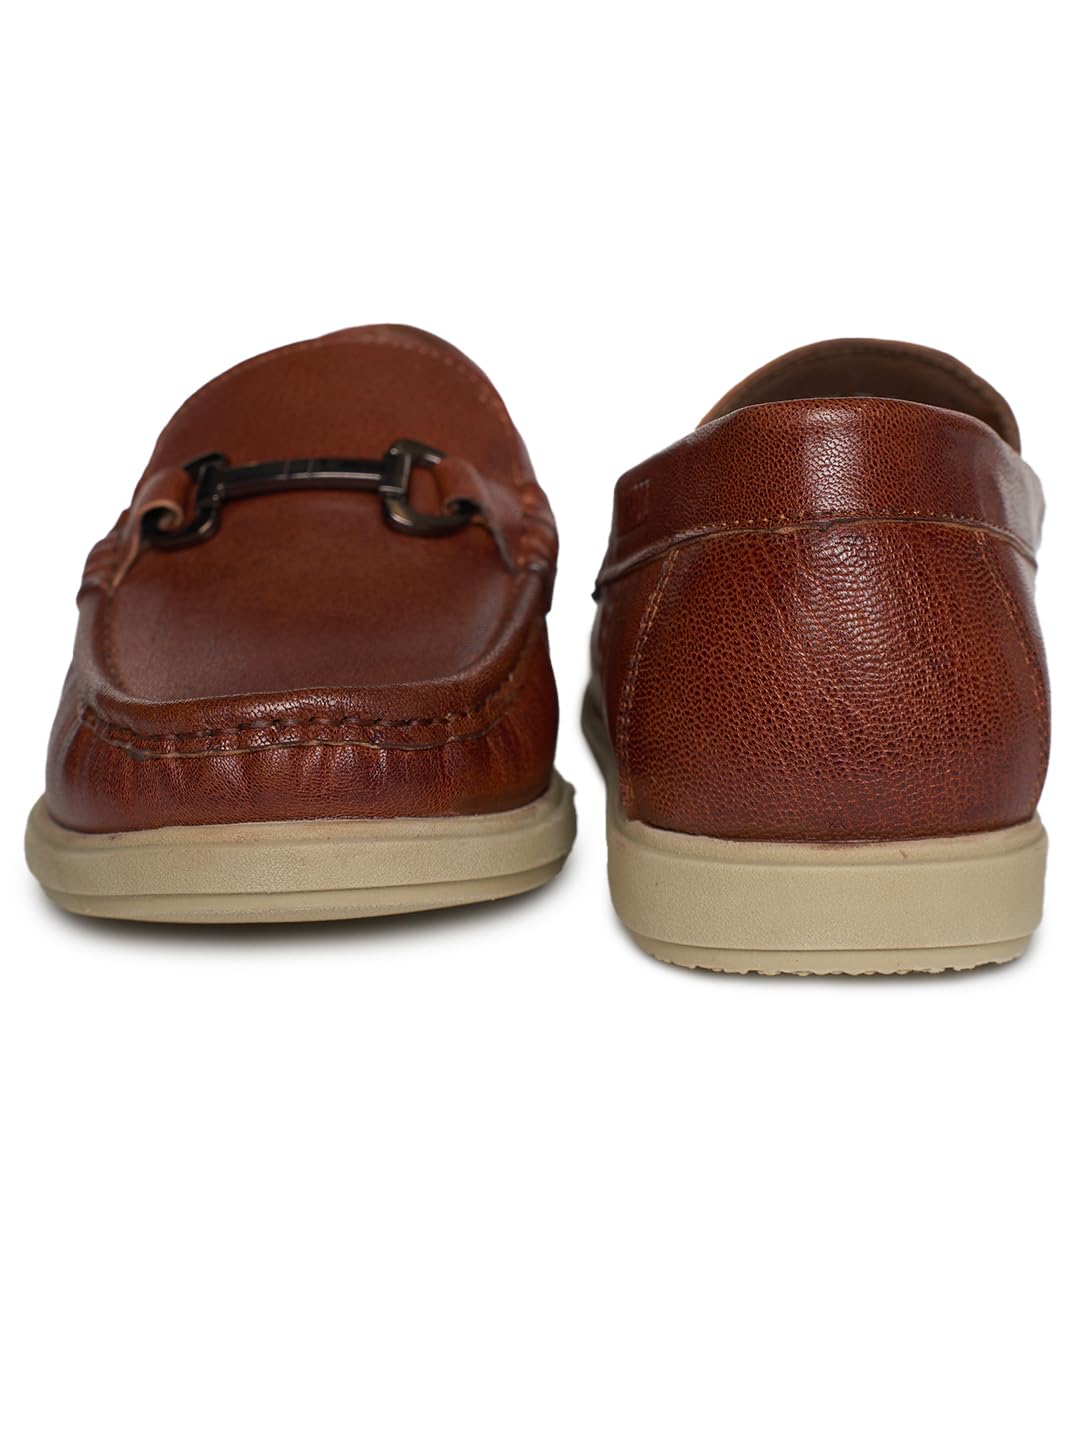 Buckaroo BASORA Full Grain Natural Leather Tan Casual Loafer for Mens 